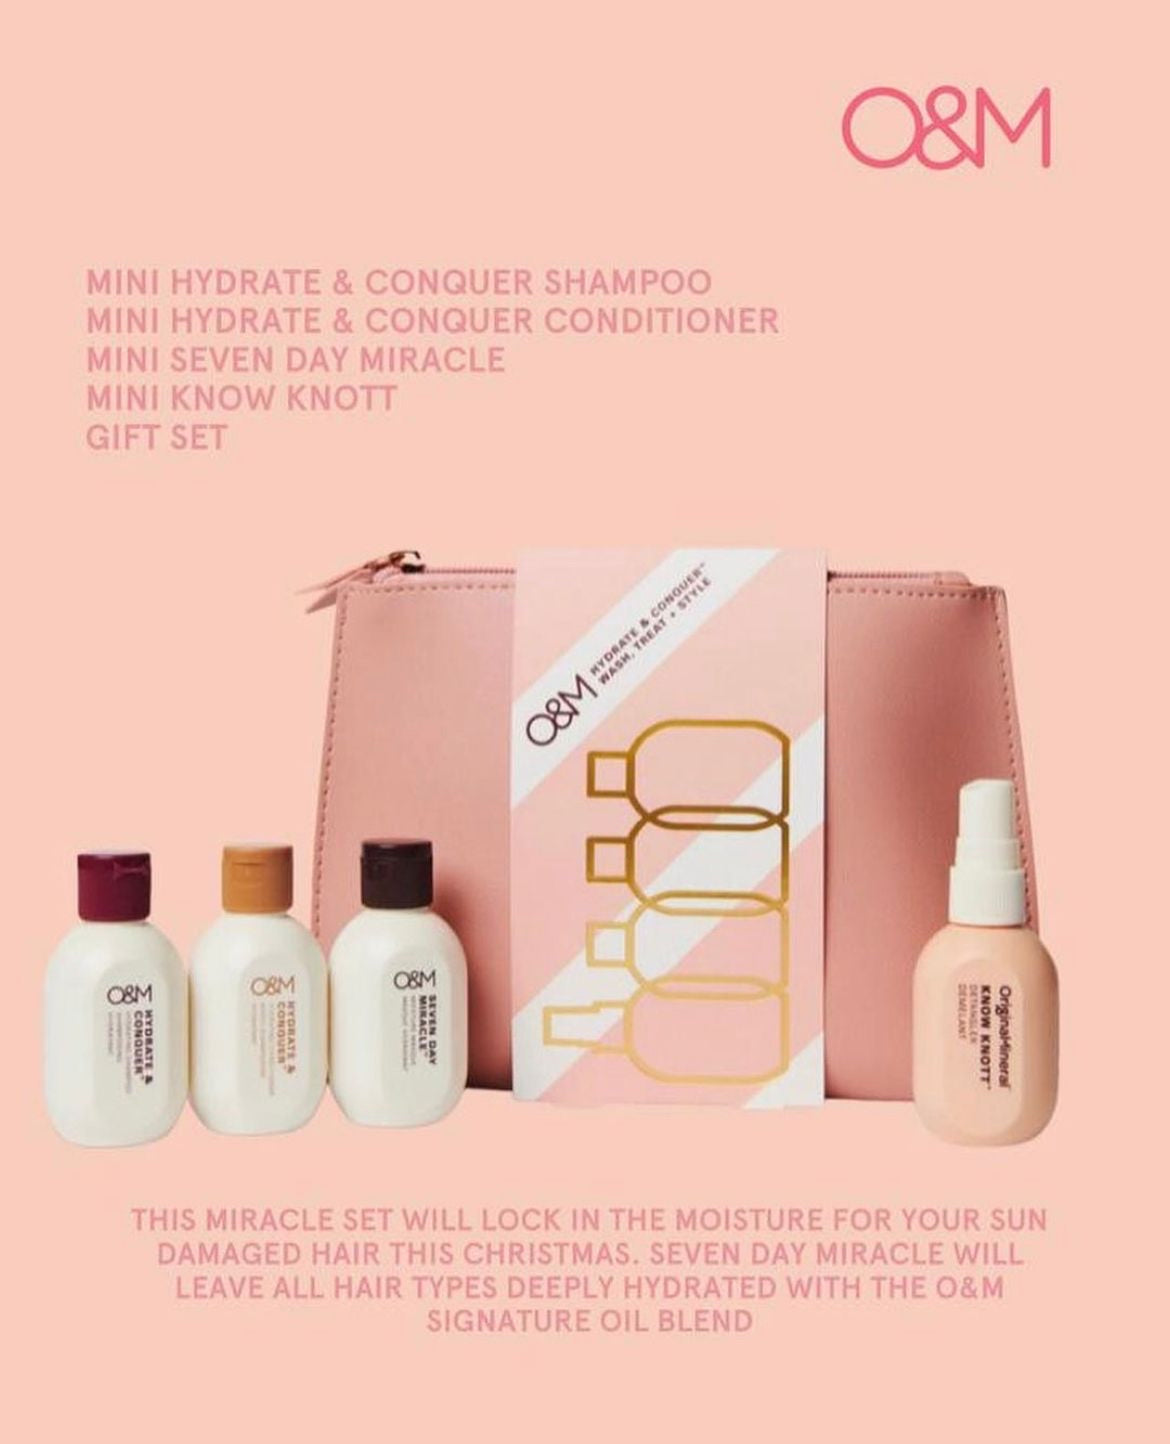 O&M Mini’s gift set for dry hair